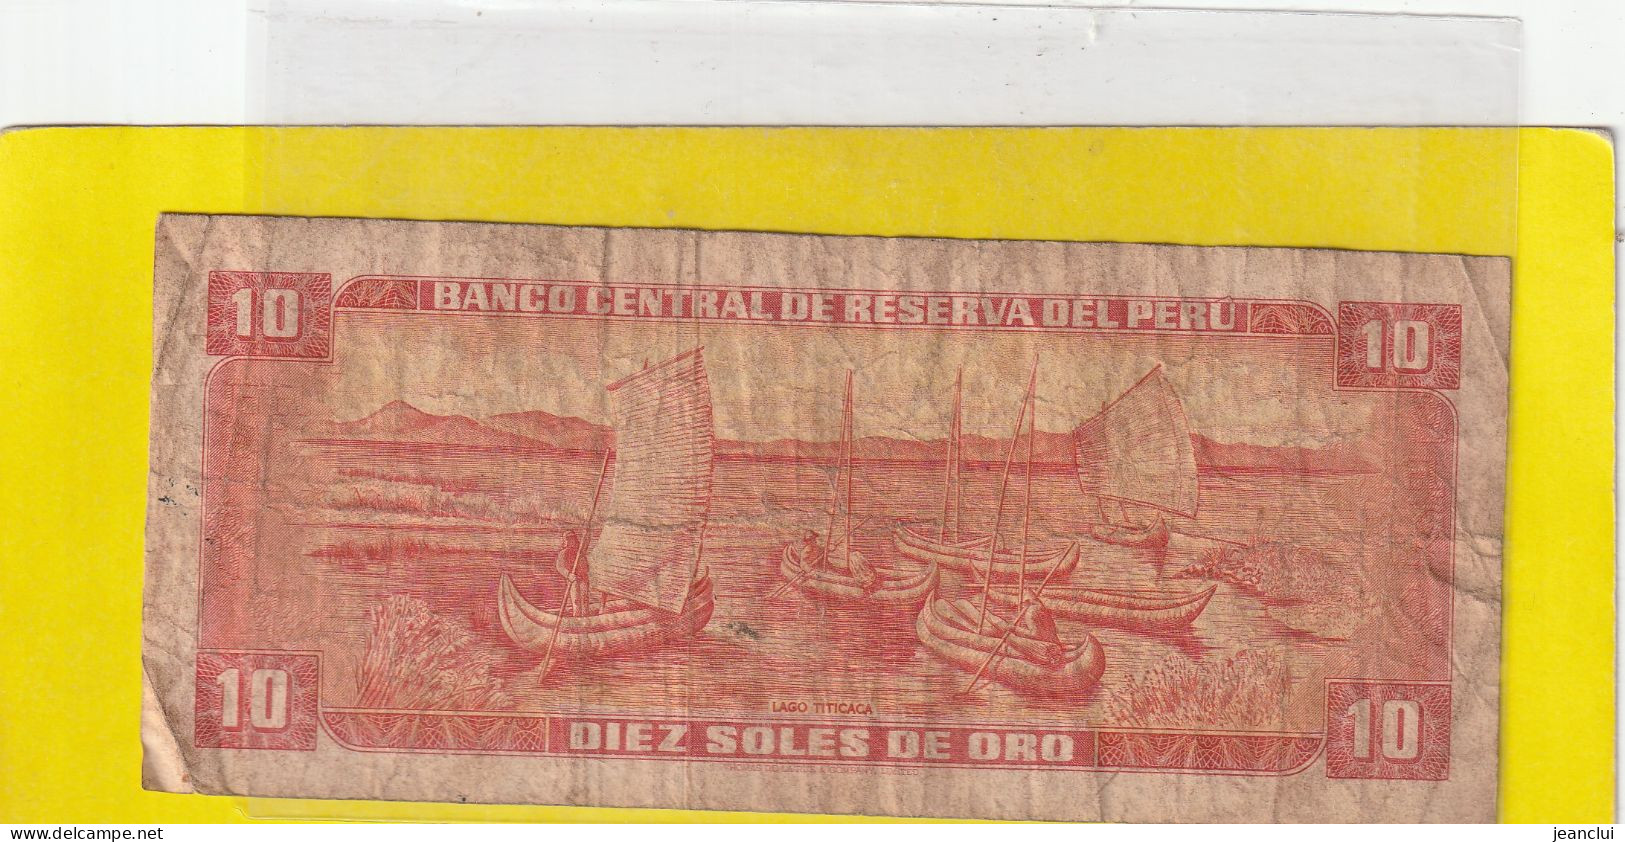 BANCO CENTRAL DE RESERVA DEL PERU .  10 SOLES DE ORO  .  24 DE MAYO DE 1973  . N°  I 343080 .  2 SCANNES  .  ETAT USITE - Perù